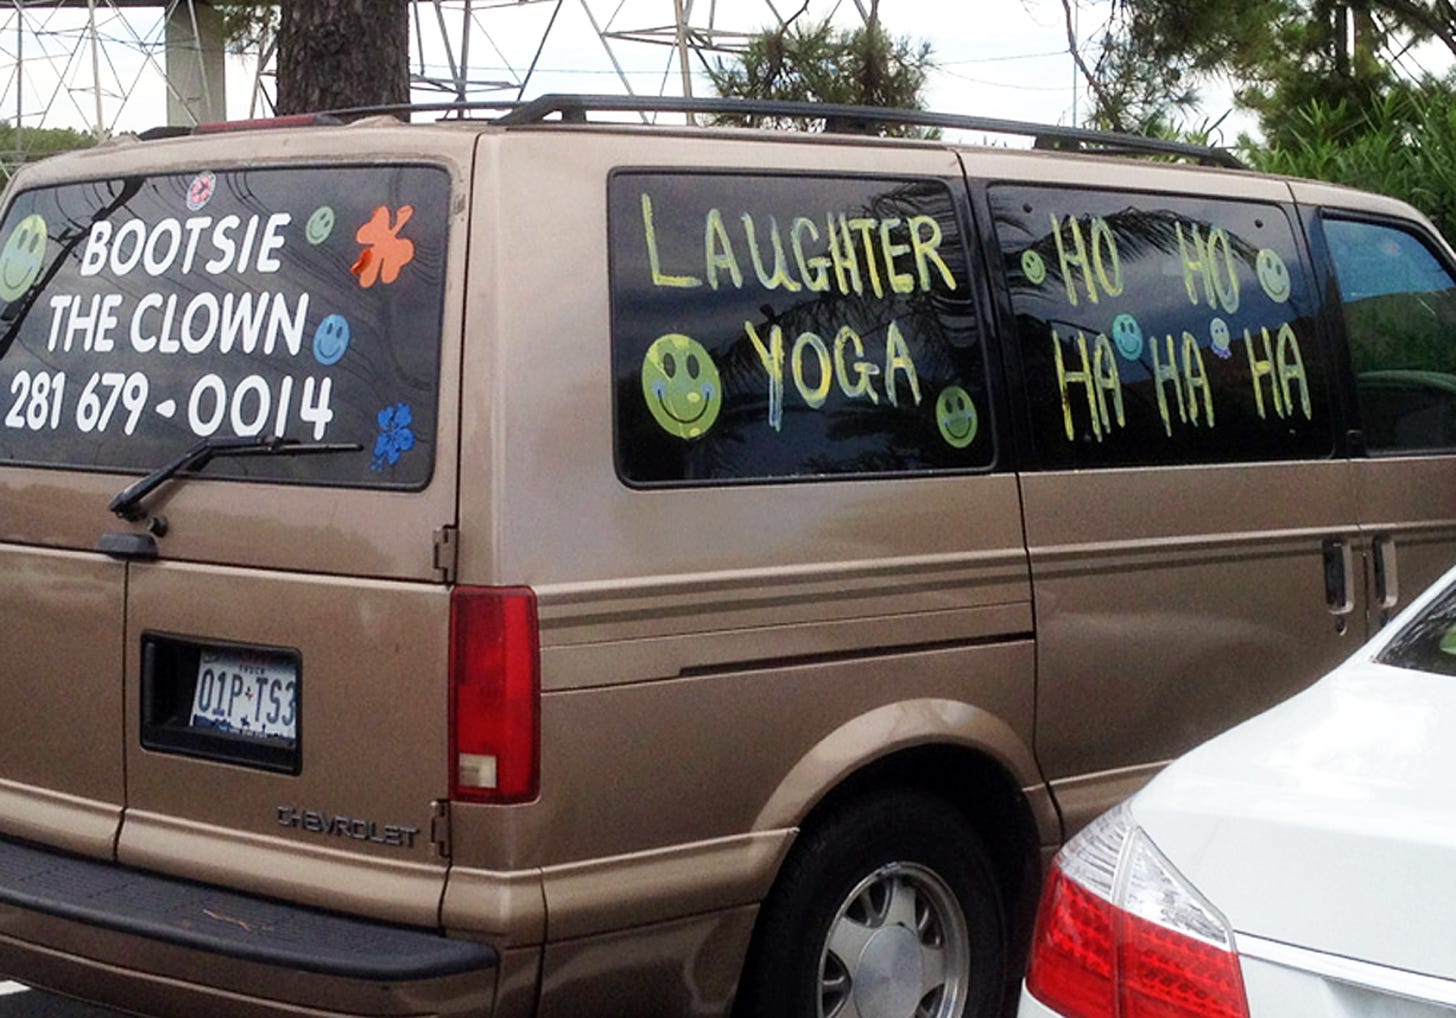 Old Chevy van for Bootsie the Clown, Laughter Yoga Ho Ho Ha Ha Ha